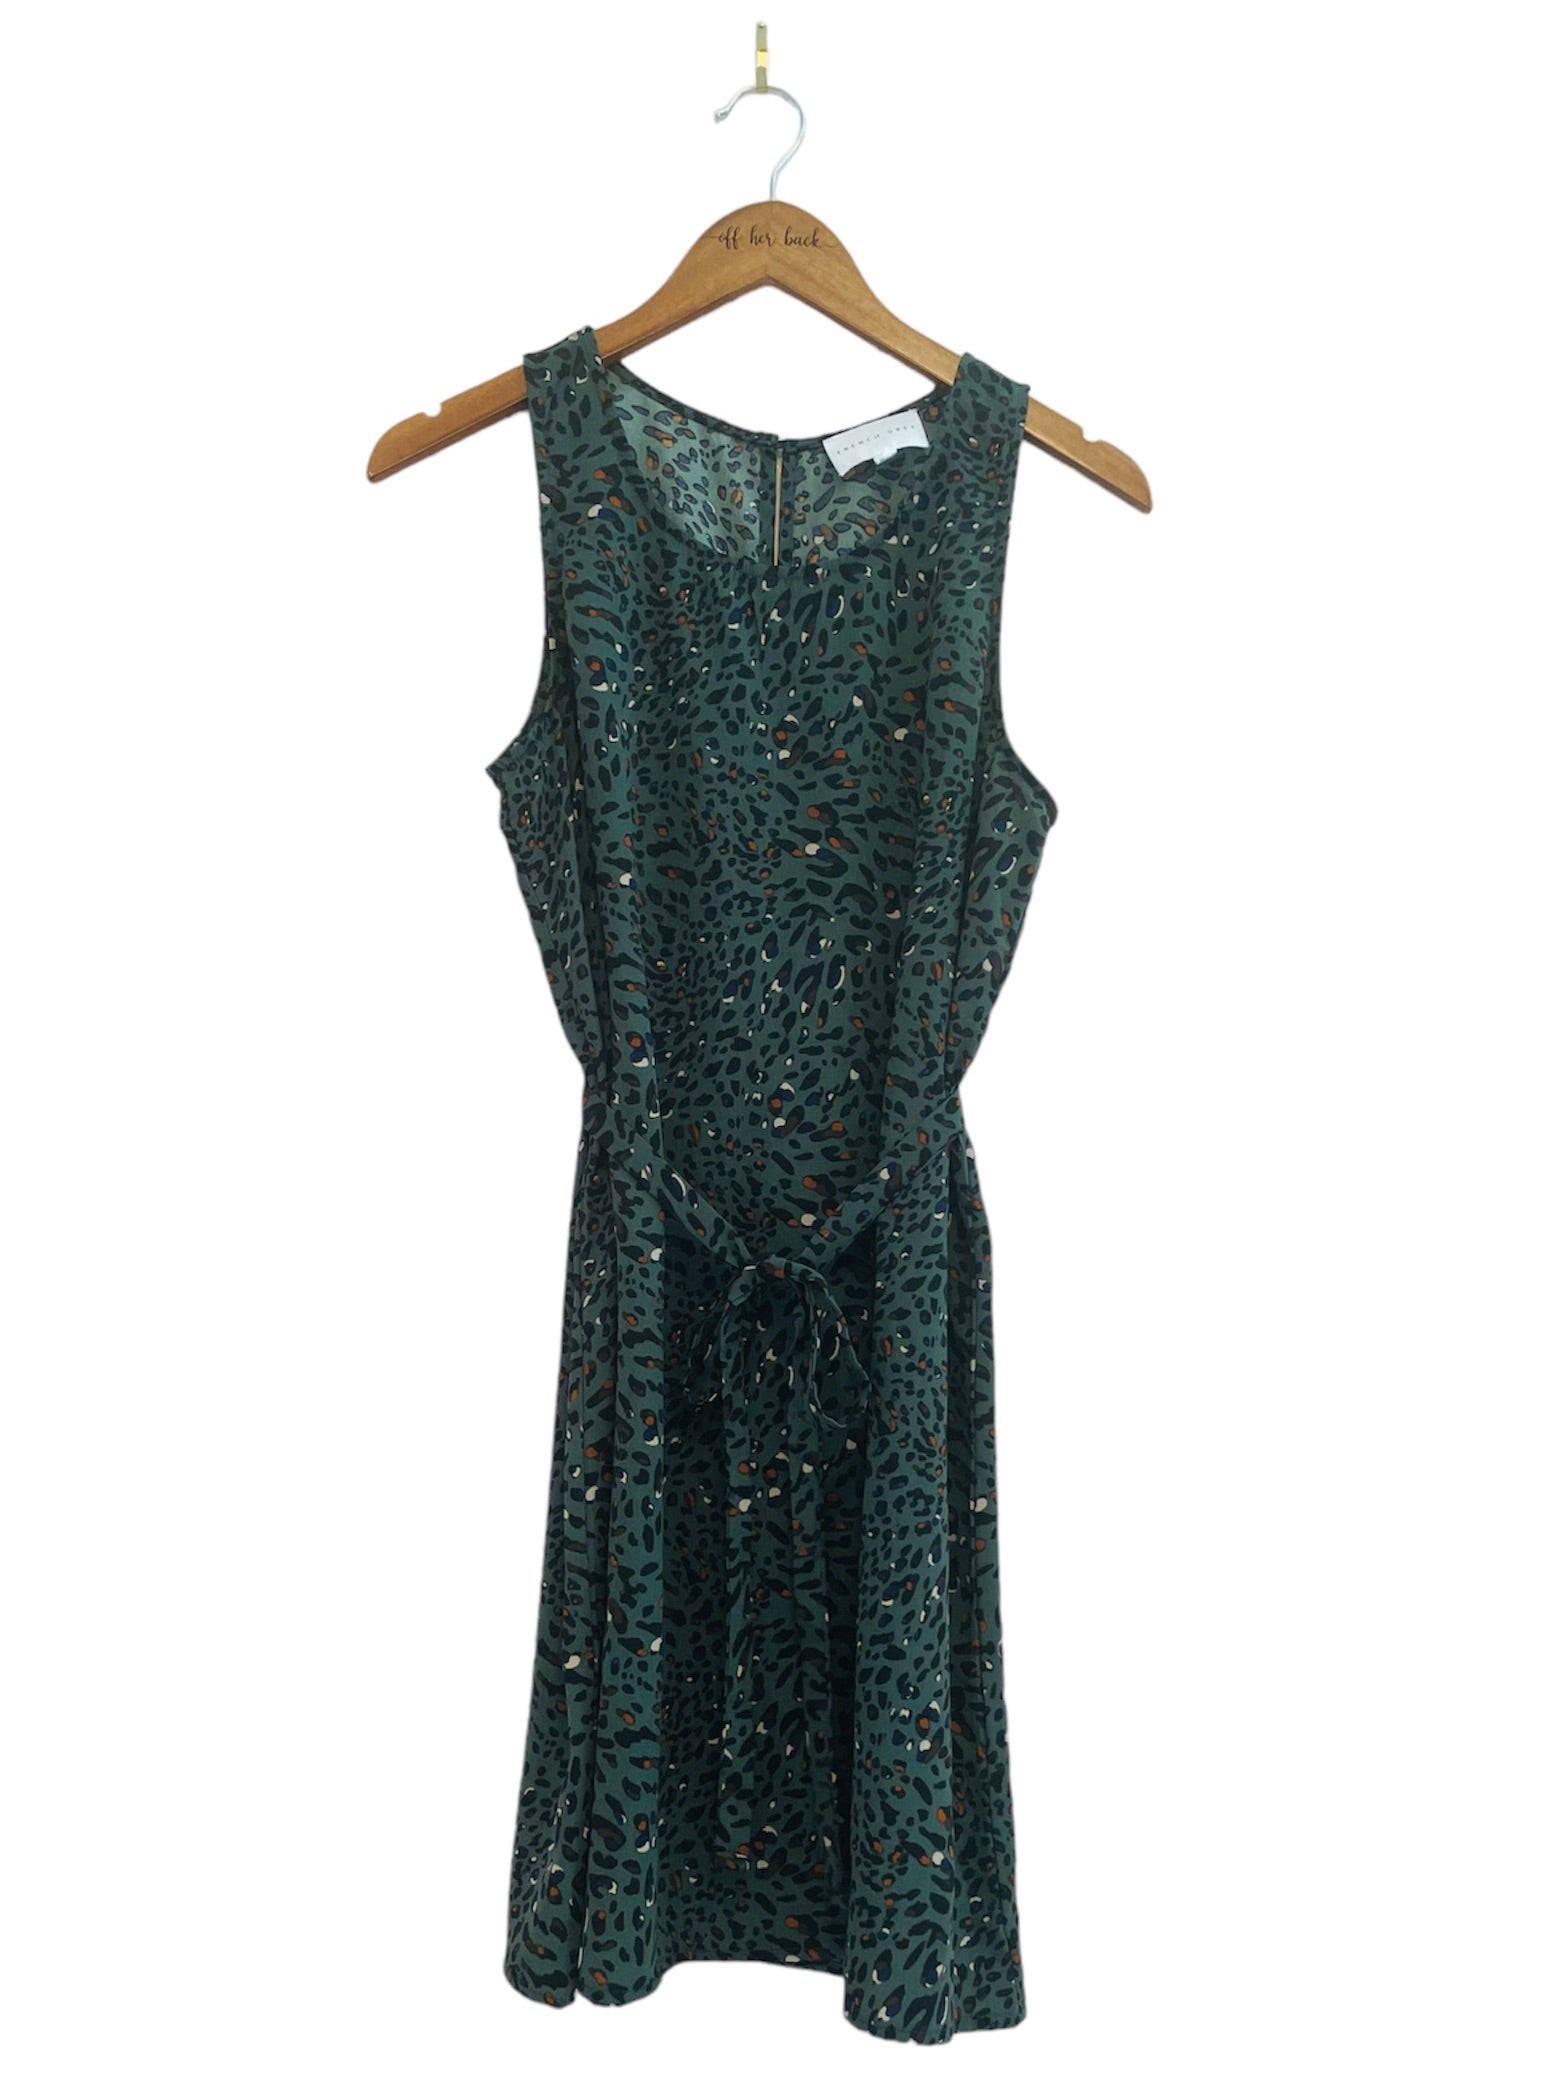 Printed Waist Tied Dress Size: Medium